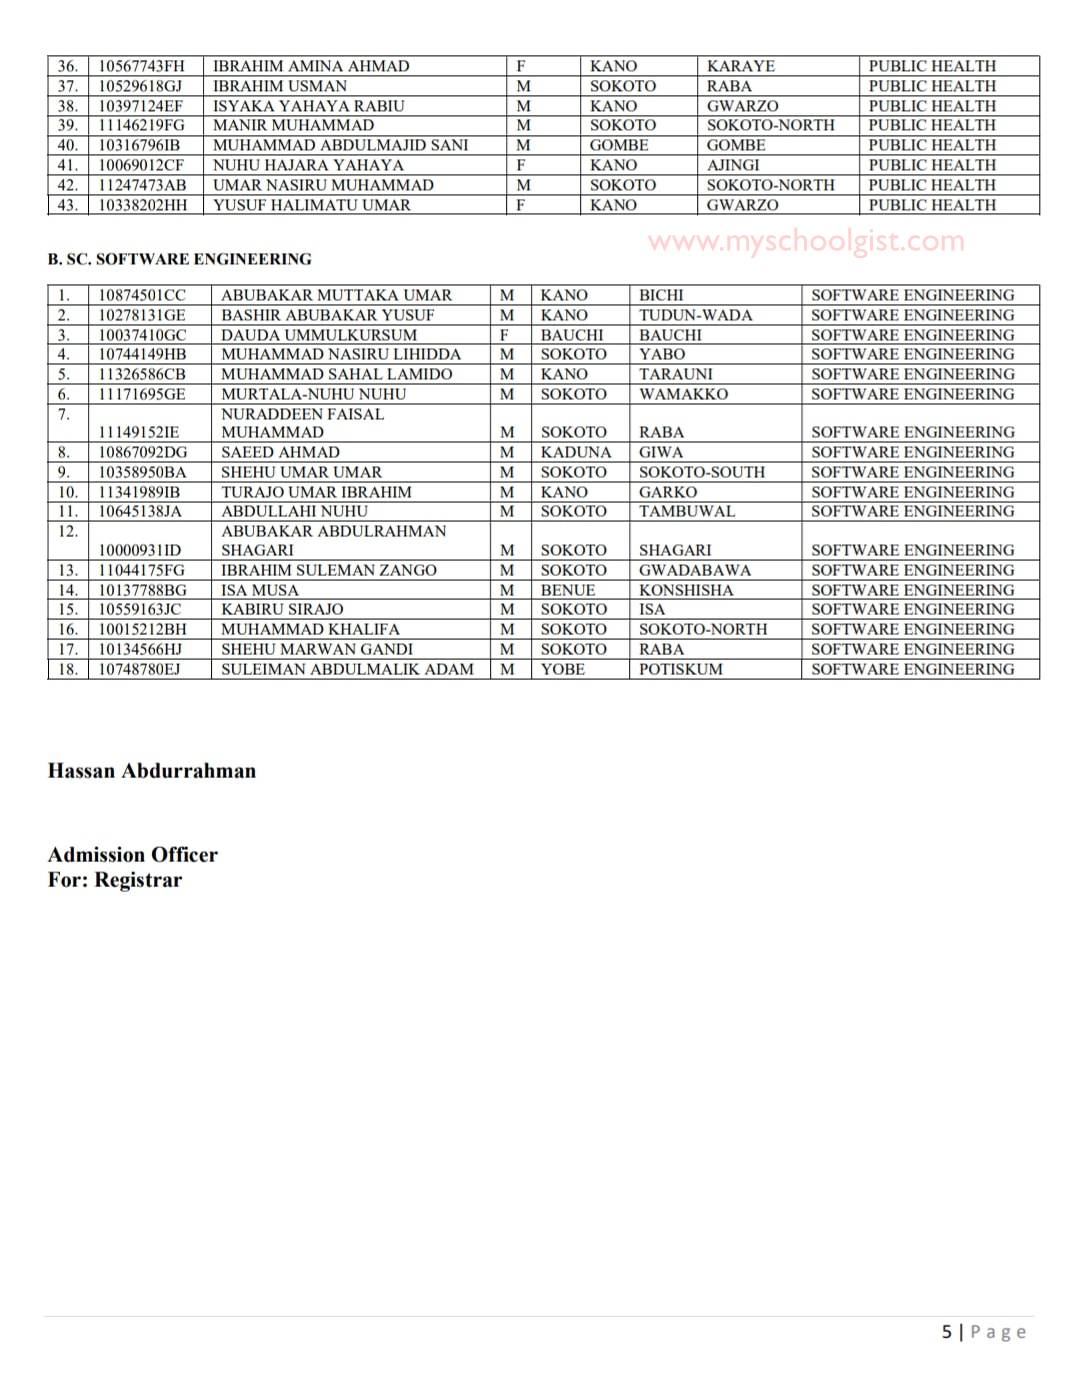 Al-Istiqama University Sumaila (AUSU) Admission List